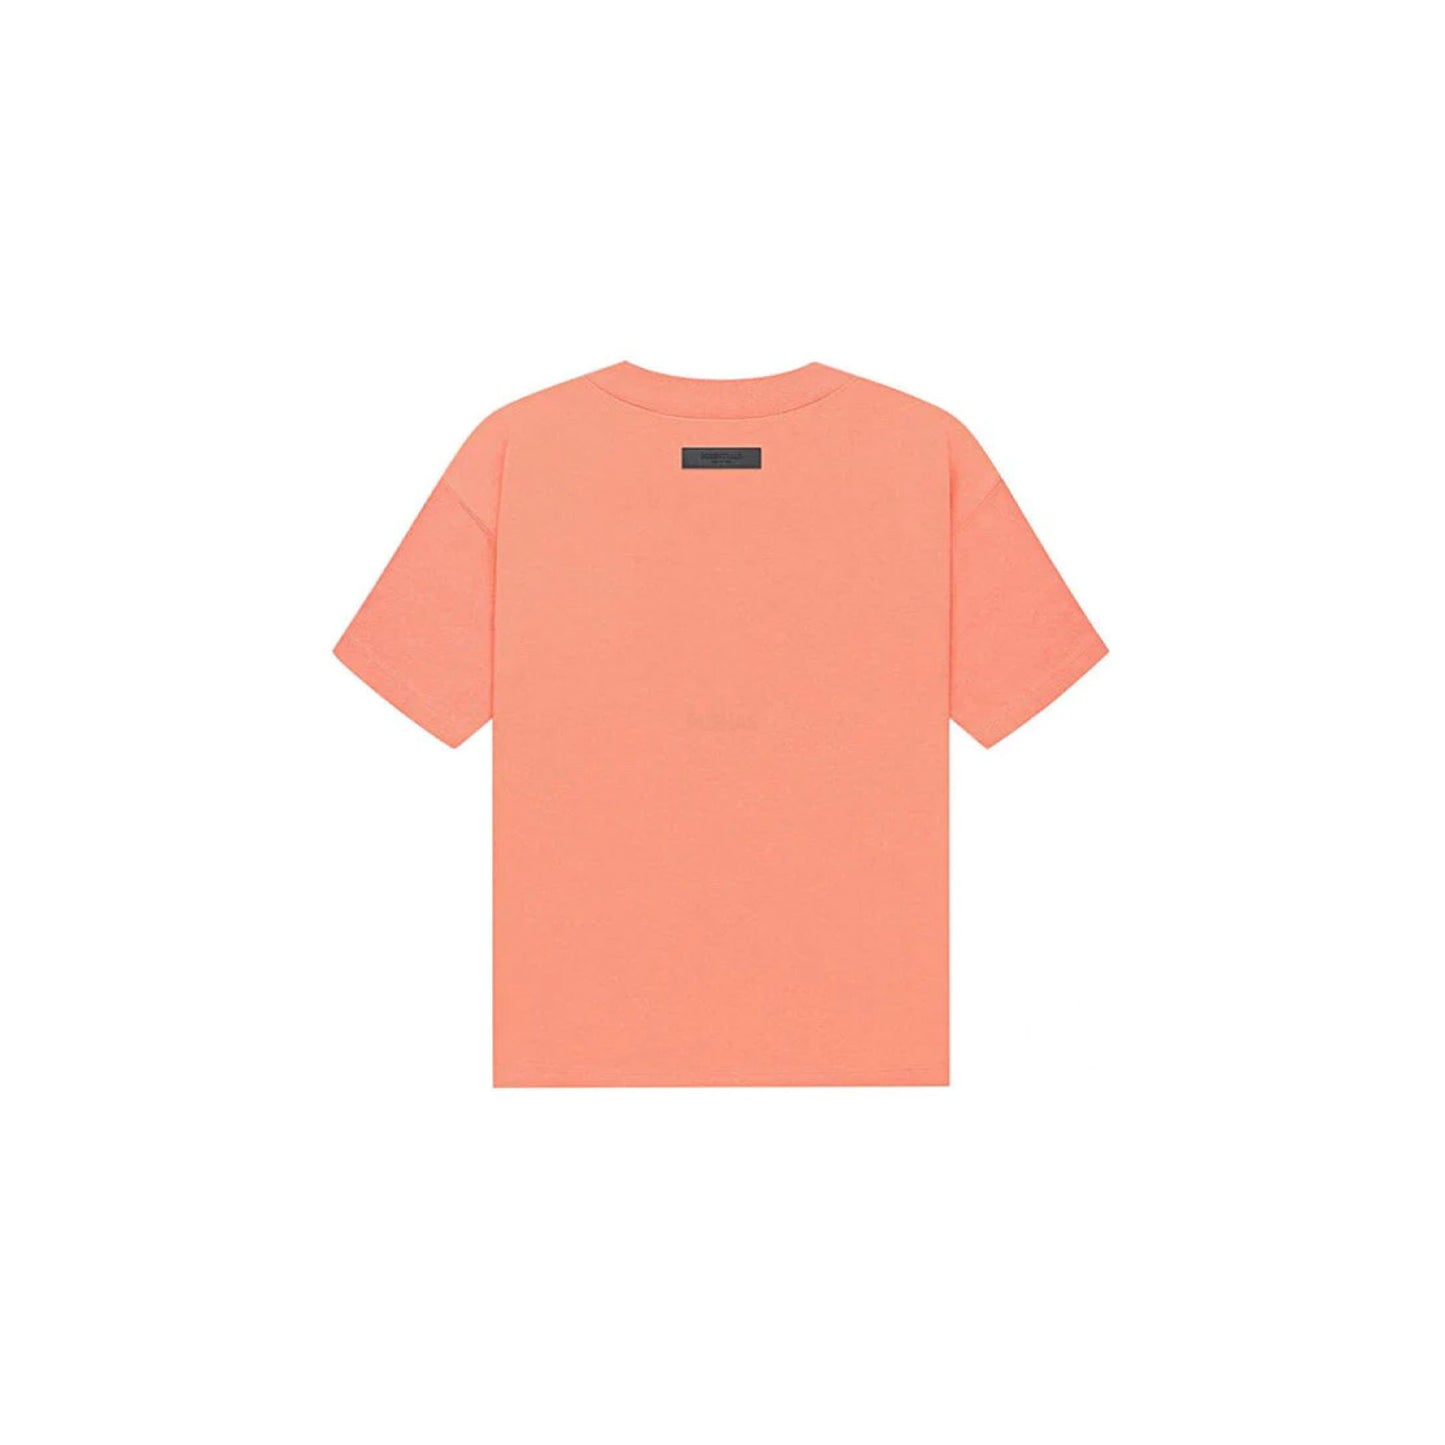 ESSENTIALS-T-Shirt-Coral-FW22